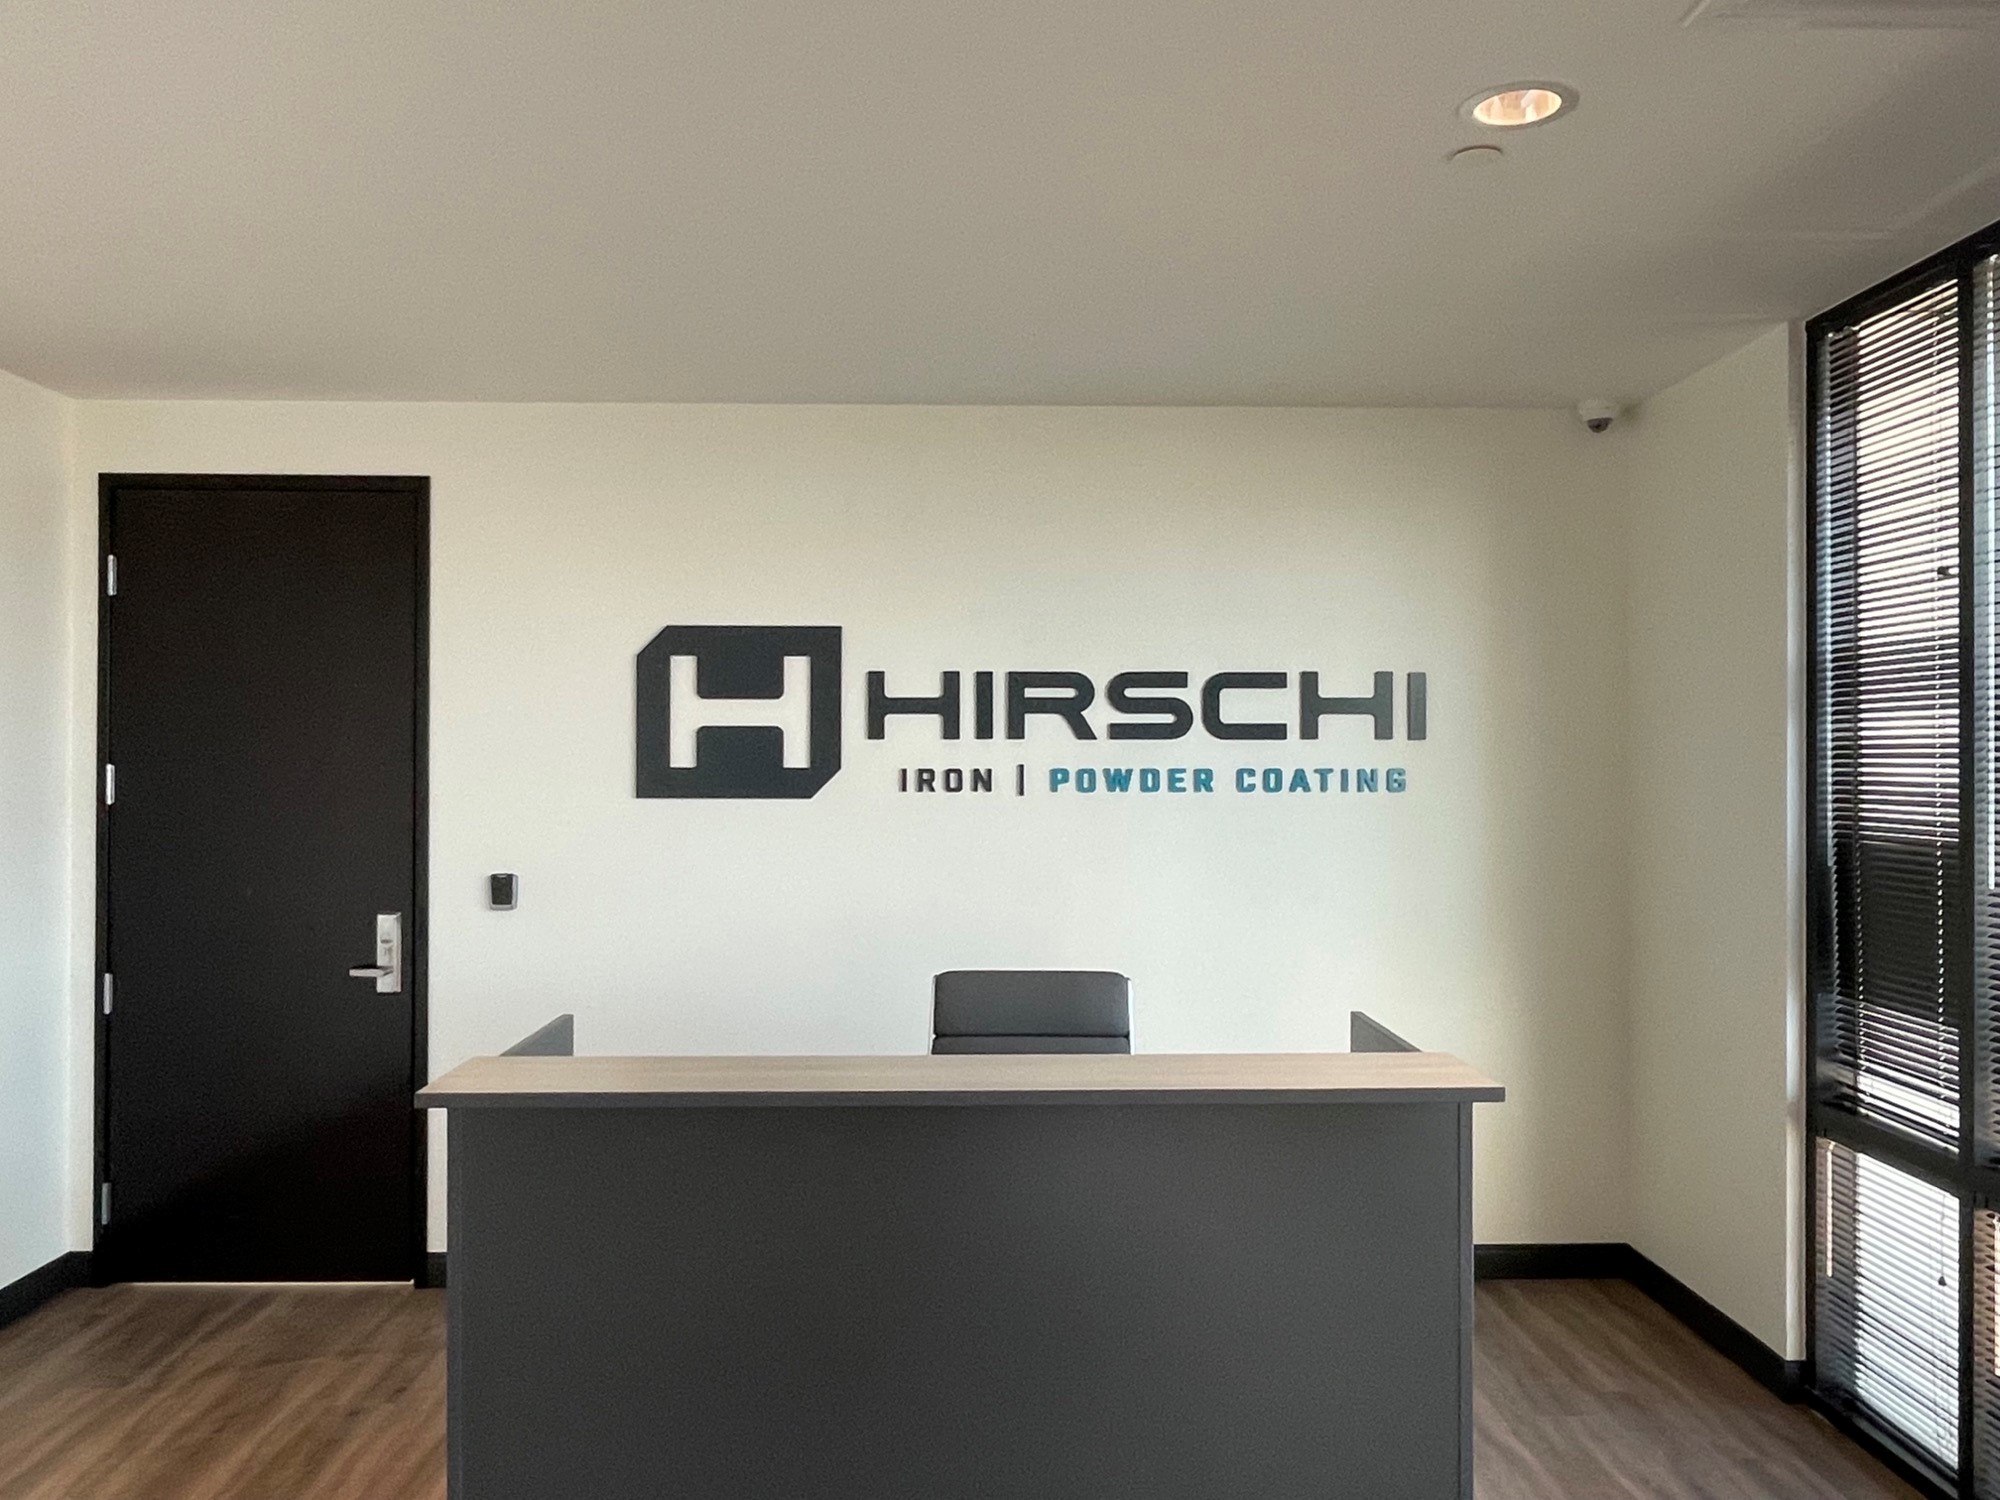 475 - Hirschi - Impact Graphic